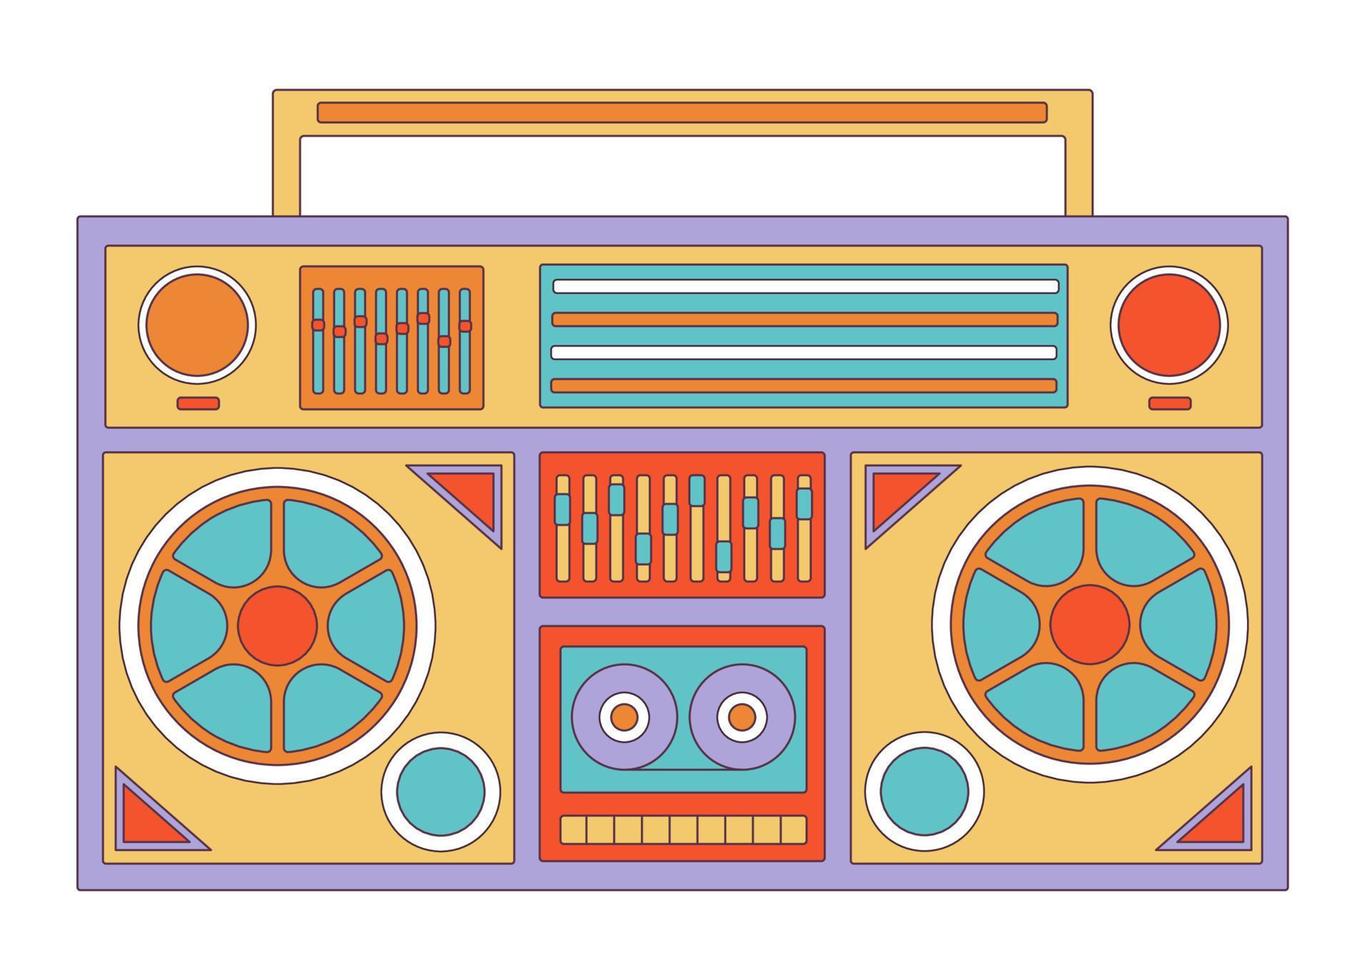 Groovy retro cassette tape recorder Retro cartoon vector illustration on white background.